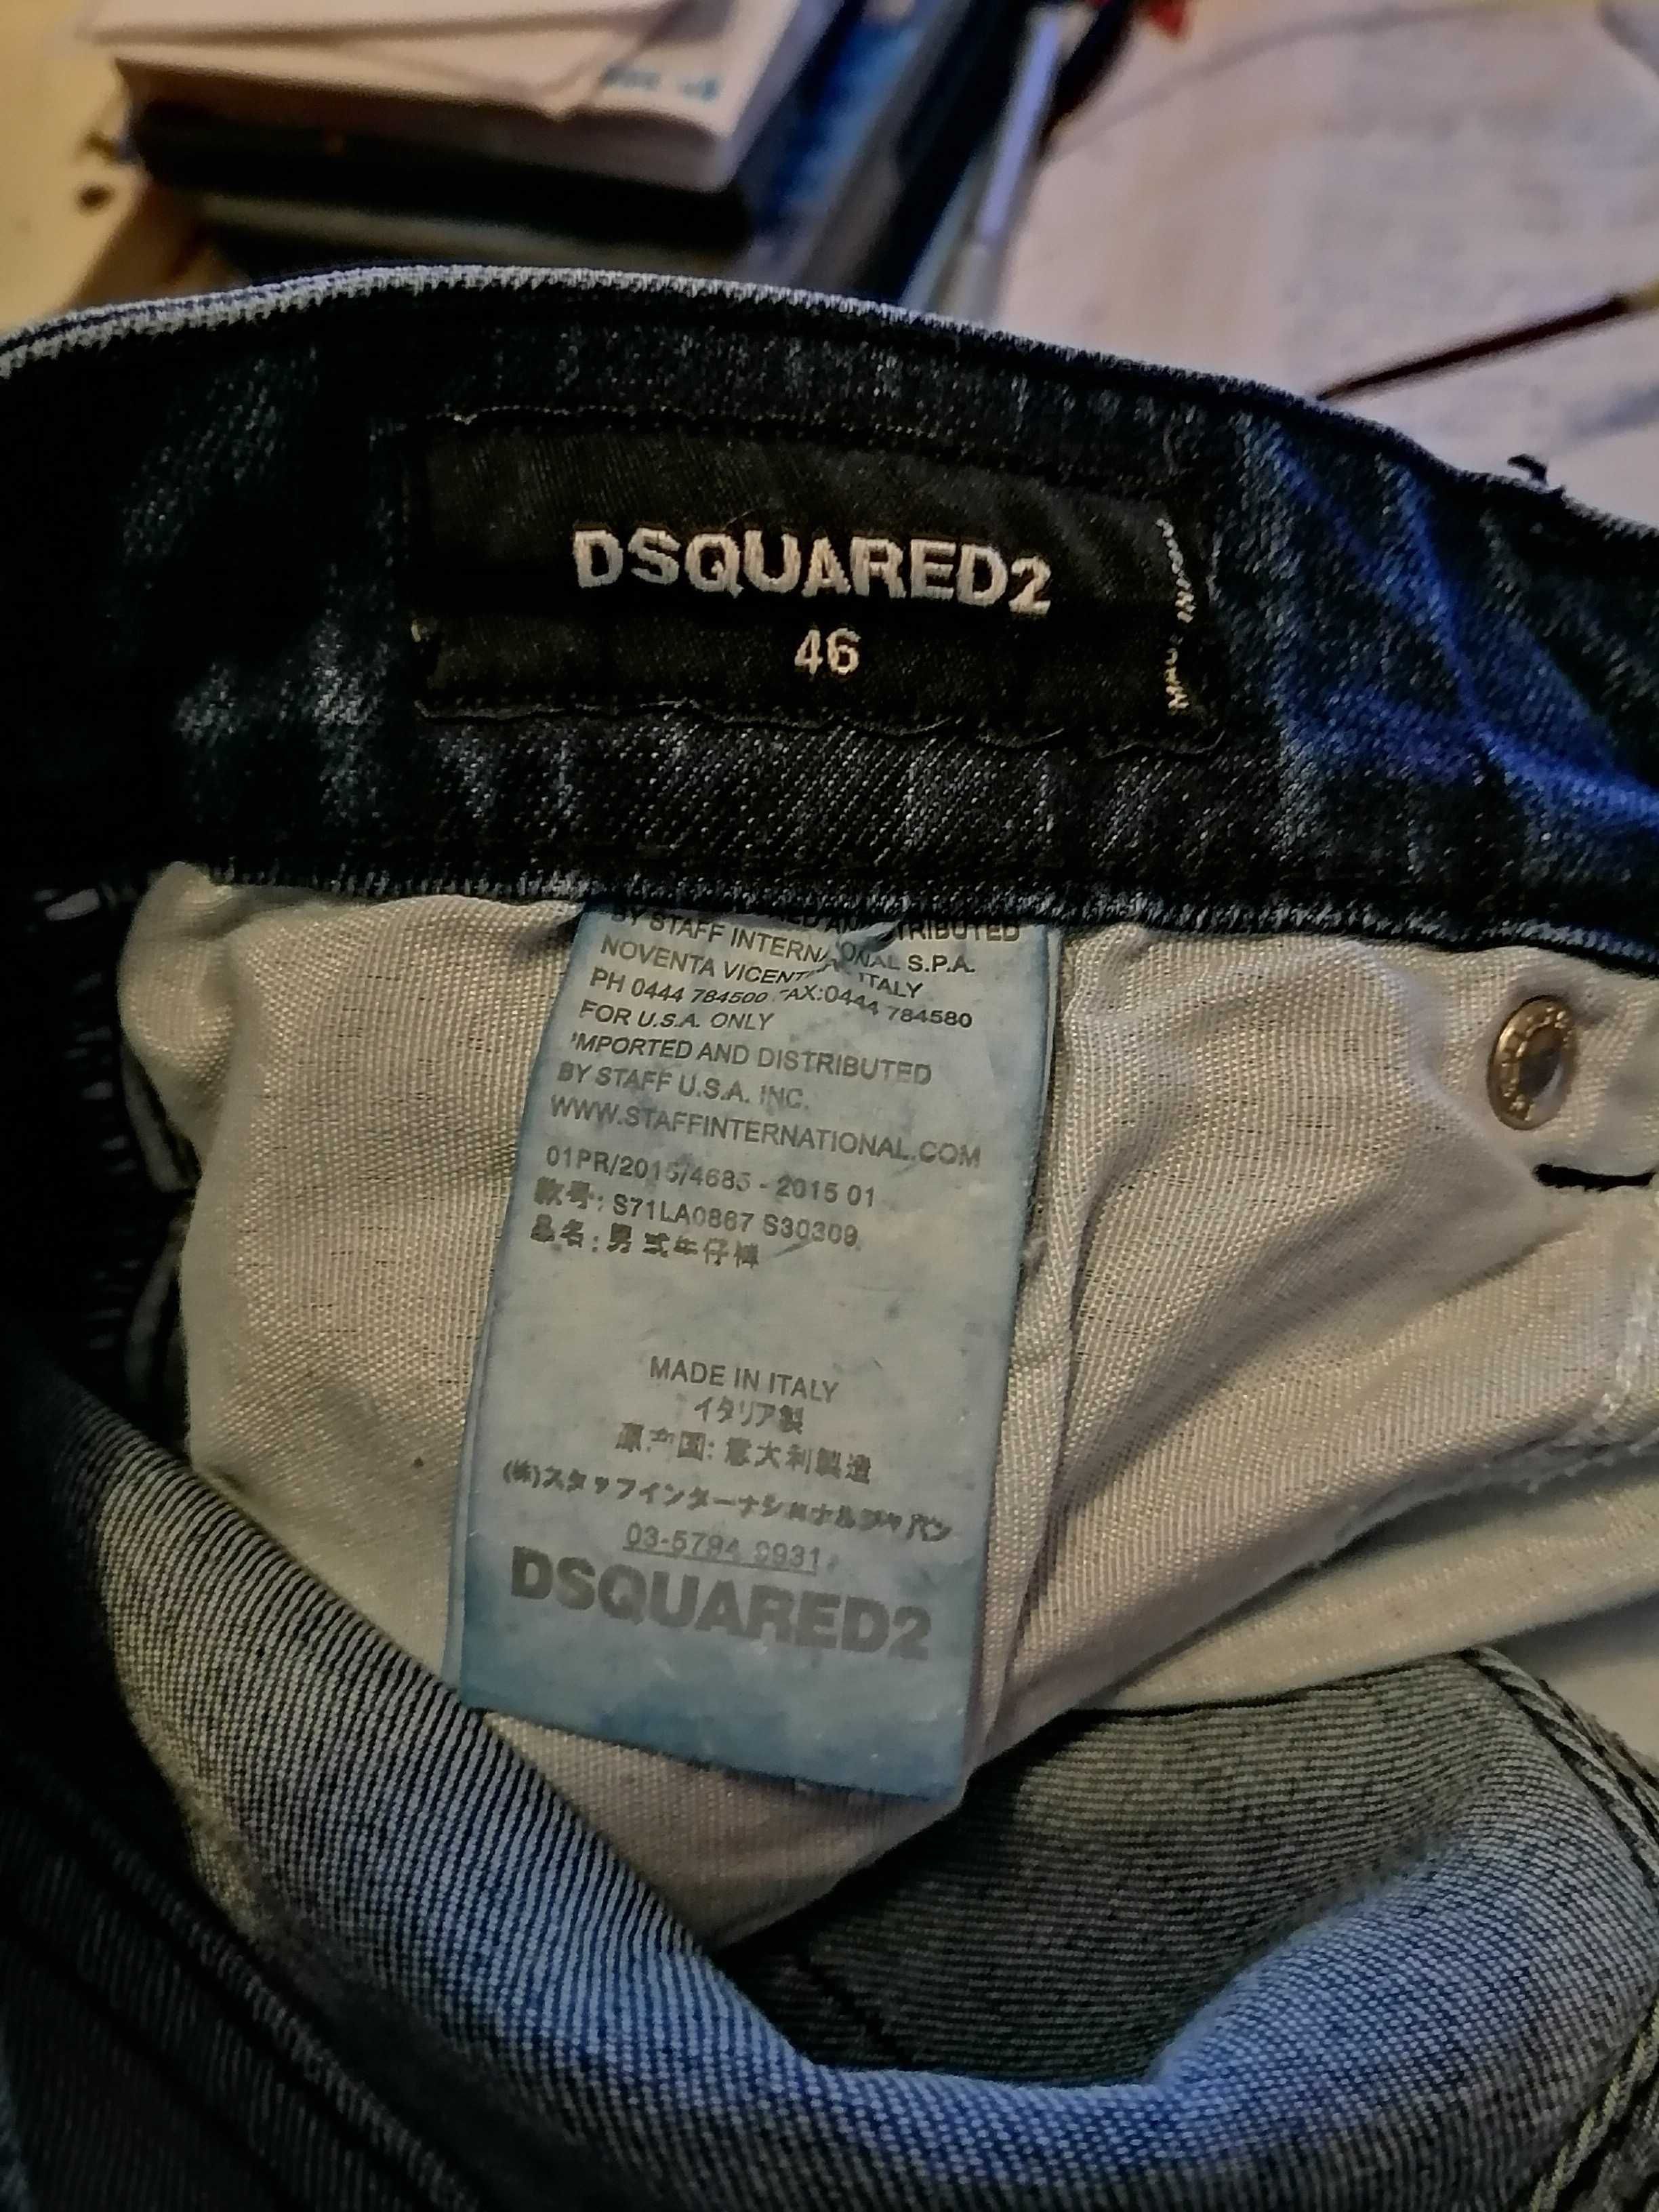 Disquared2 distressed jeans masura 46 100% Originali made in Italy